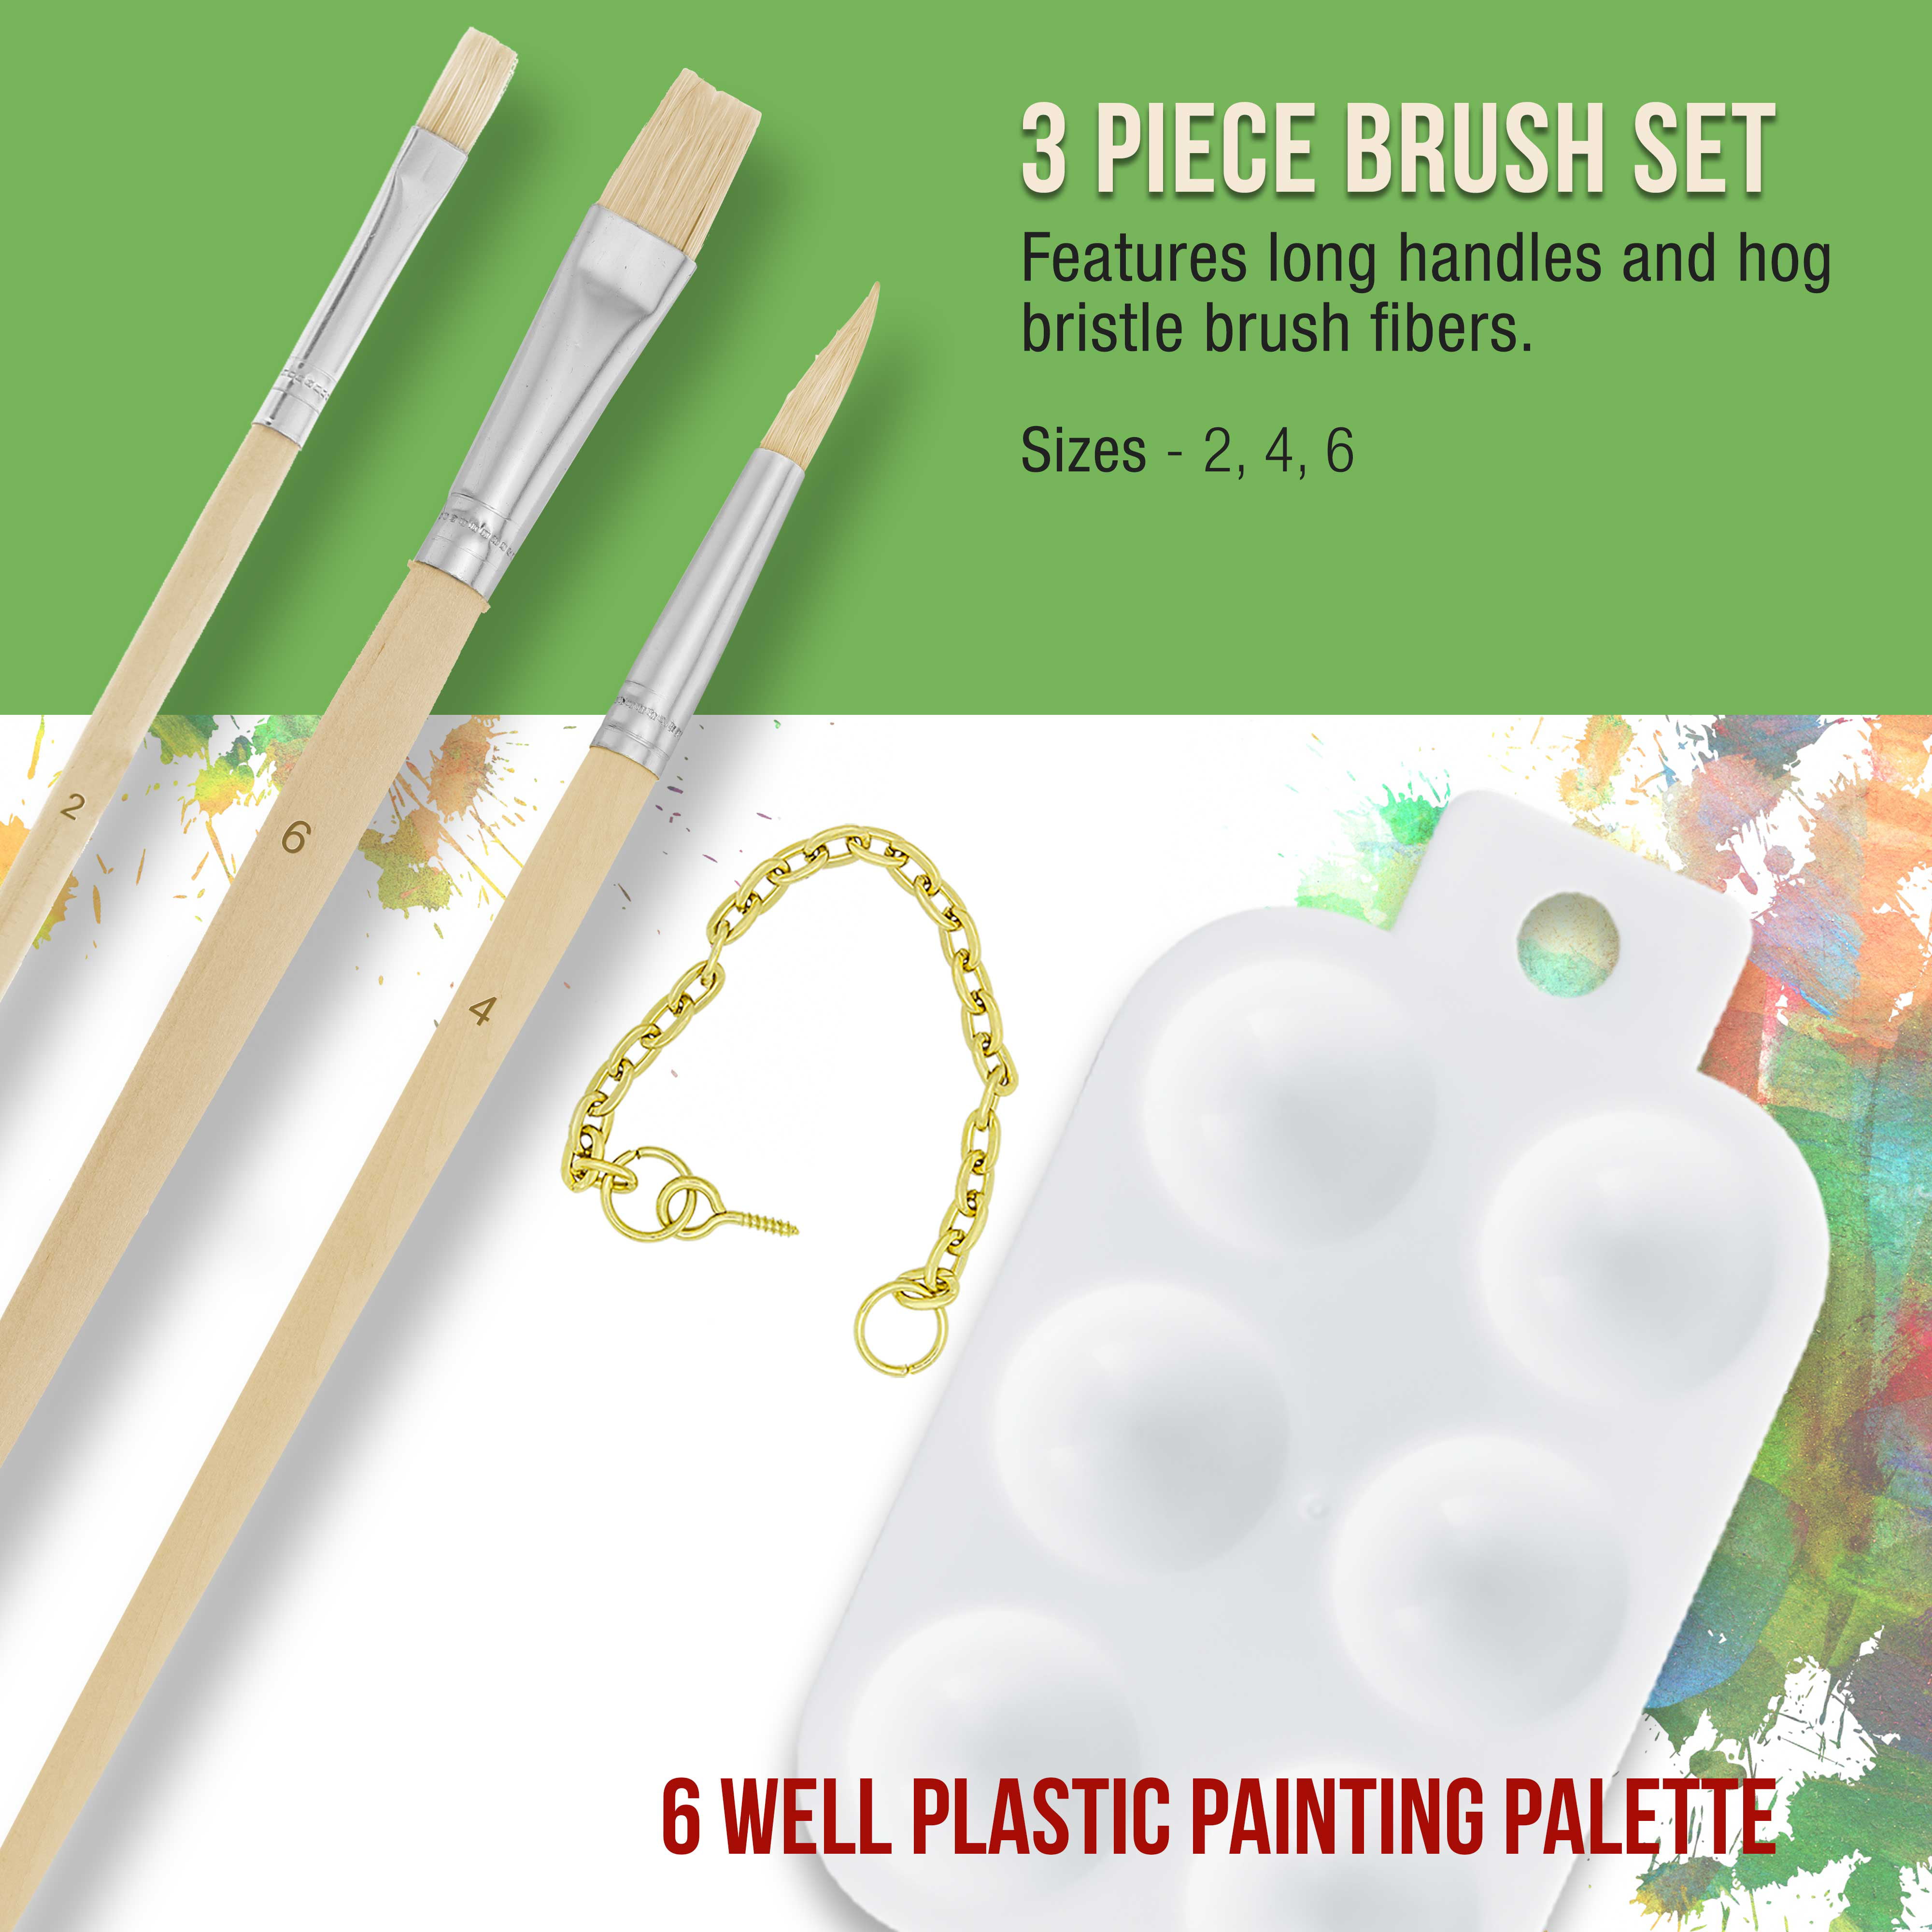 Art Canvas Paint Set Supplies – 14-Piece Mini Canvas Acrylic Painting Kit  with W